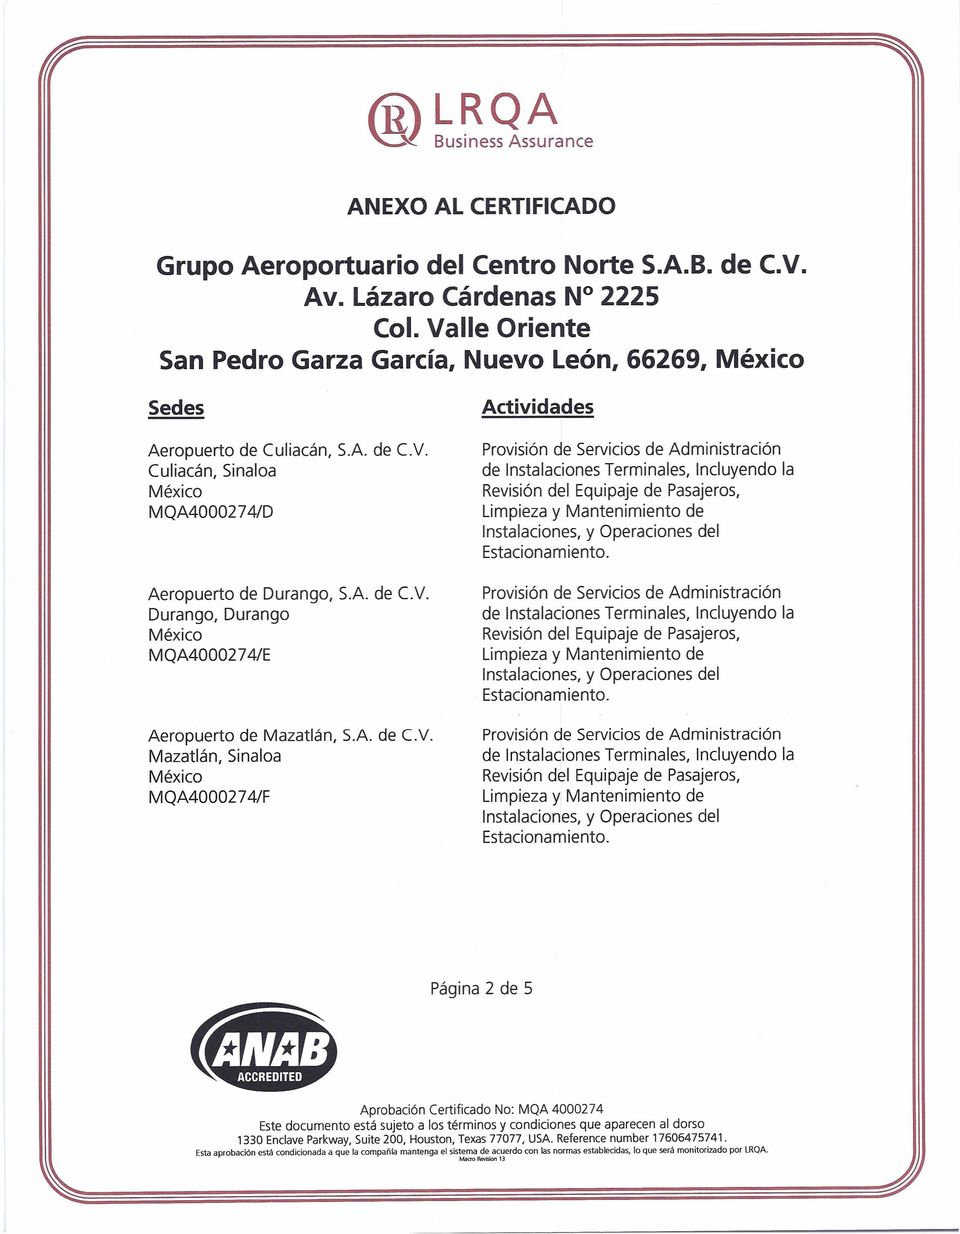 Mazatlan, Sinaloa MQA4000274/F Provision de Servicios de Administracion Provision de Servicios de Adrninistracion Paqina 2 de 5 Este